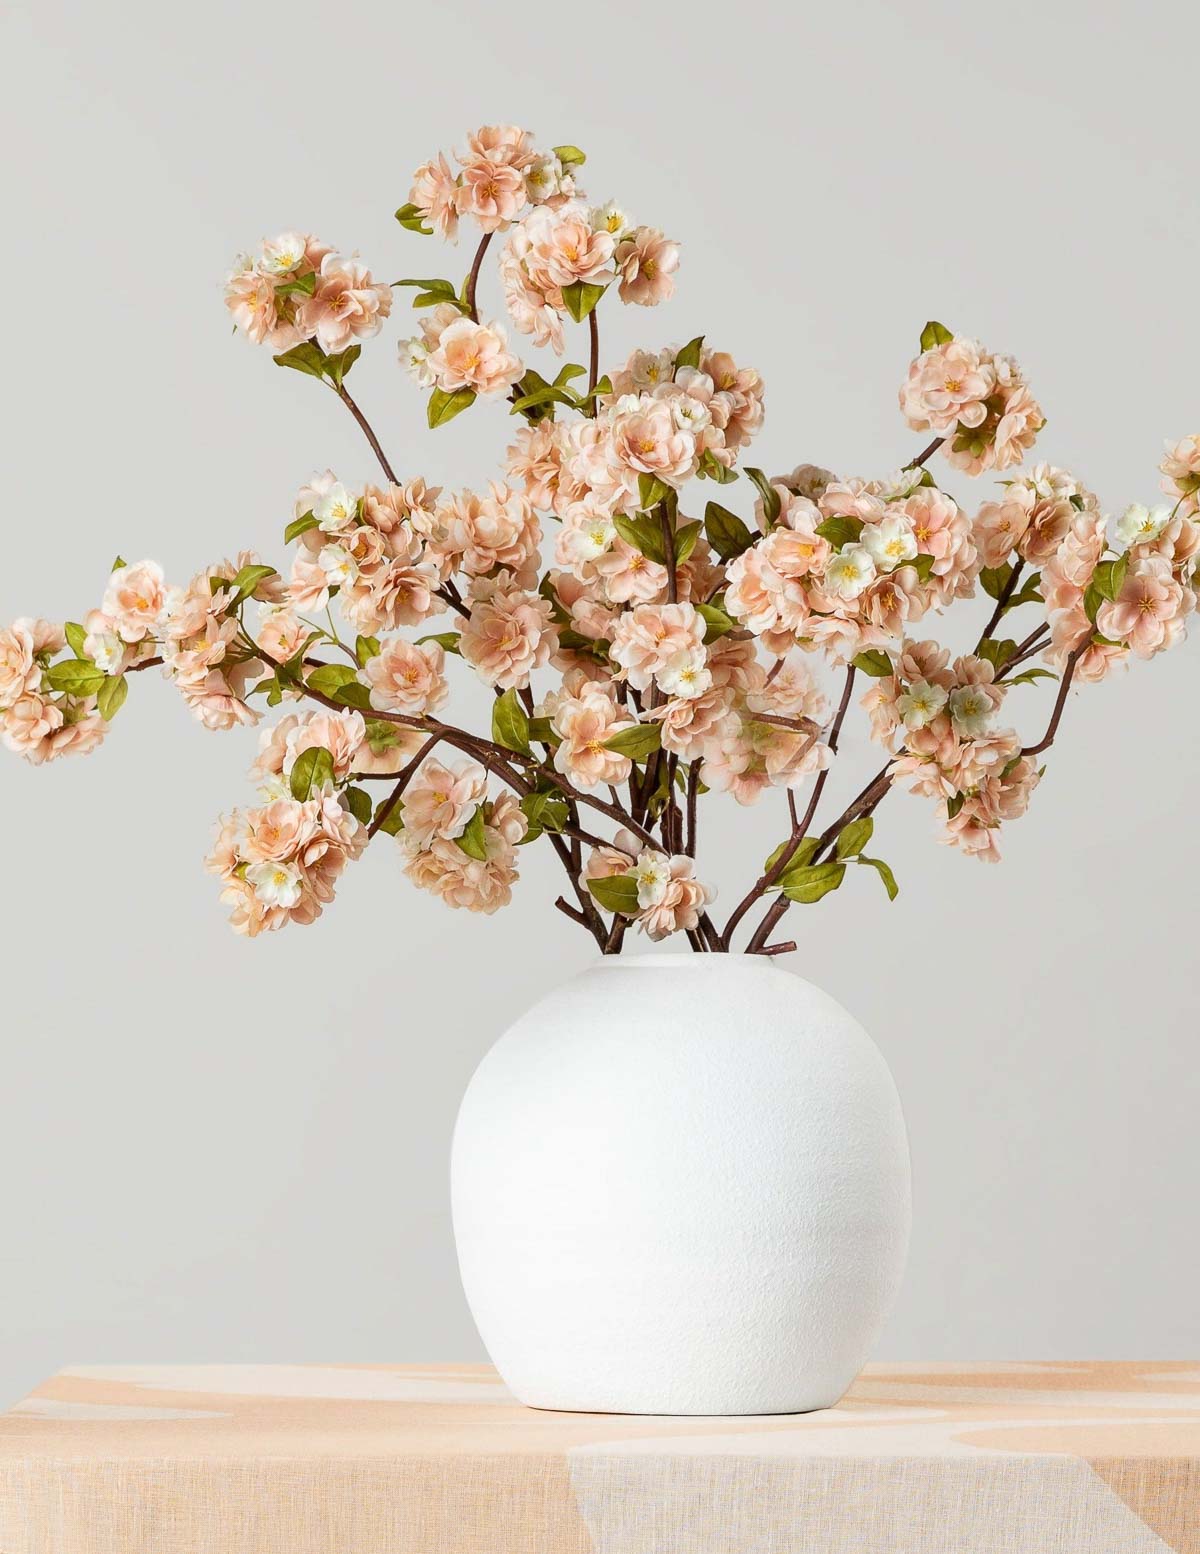 Round white vase with flowers